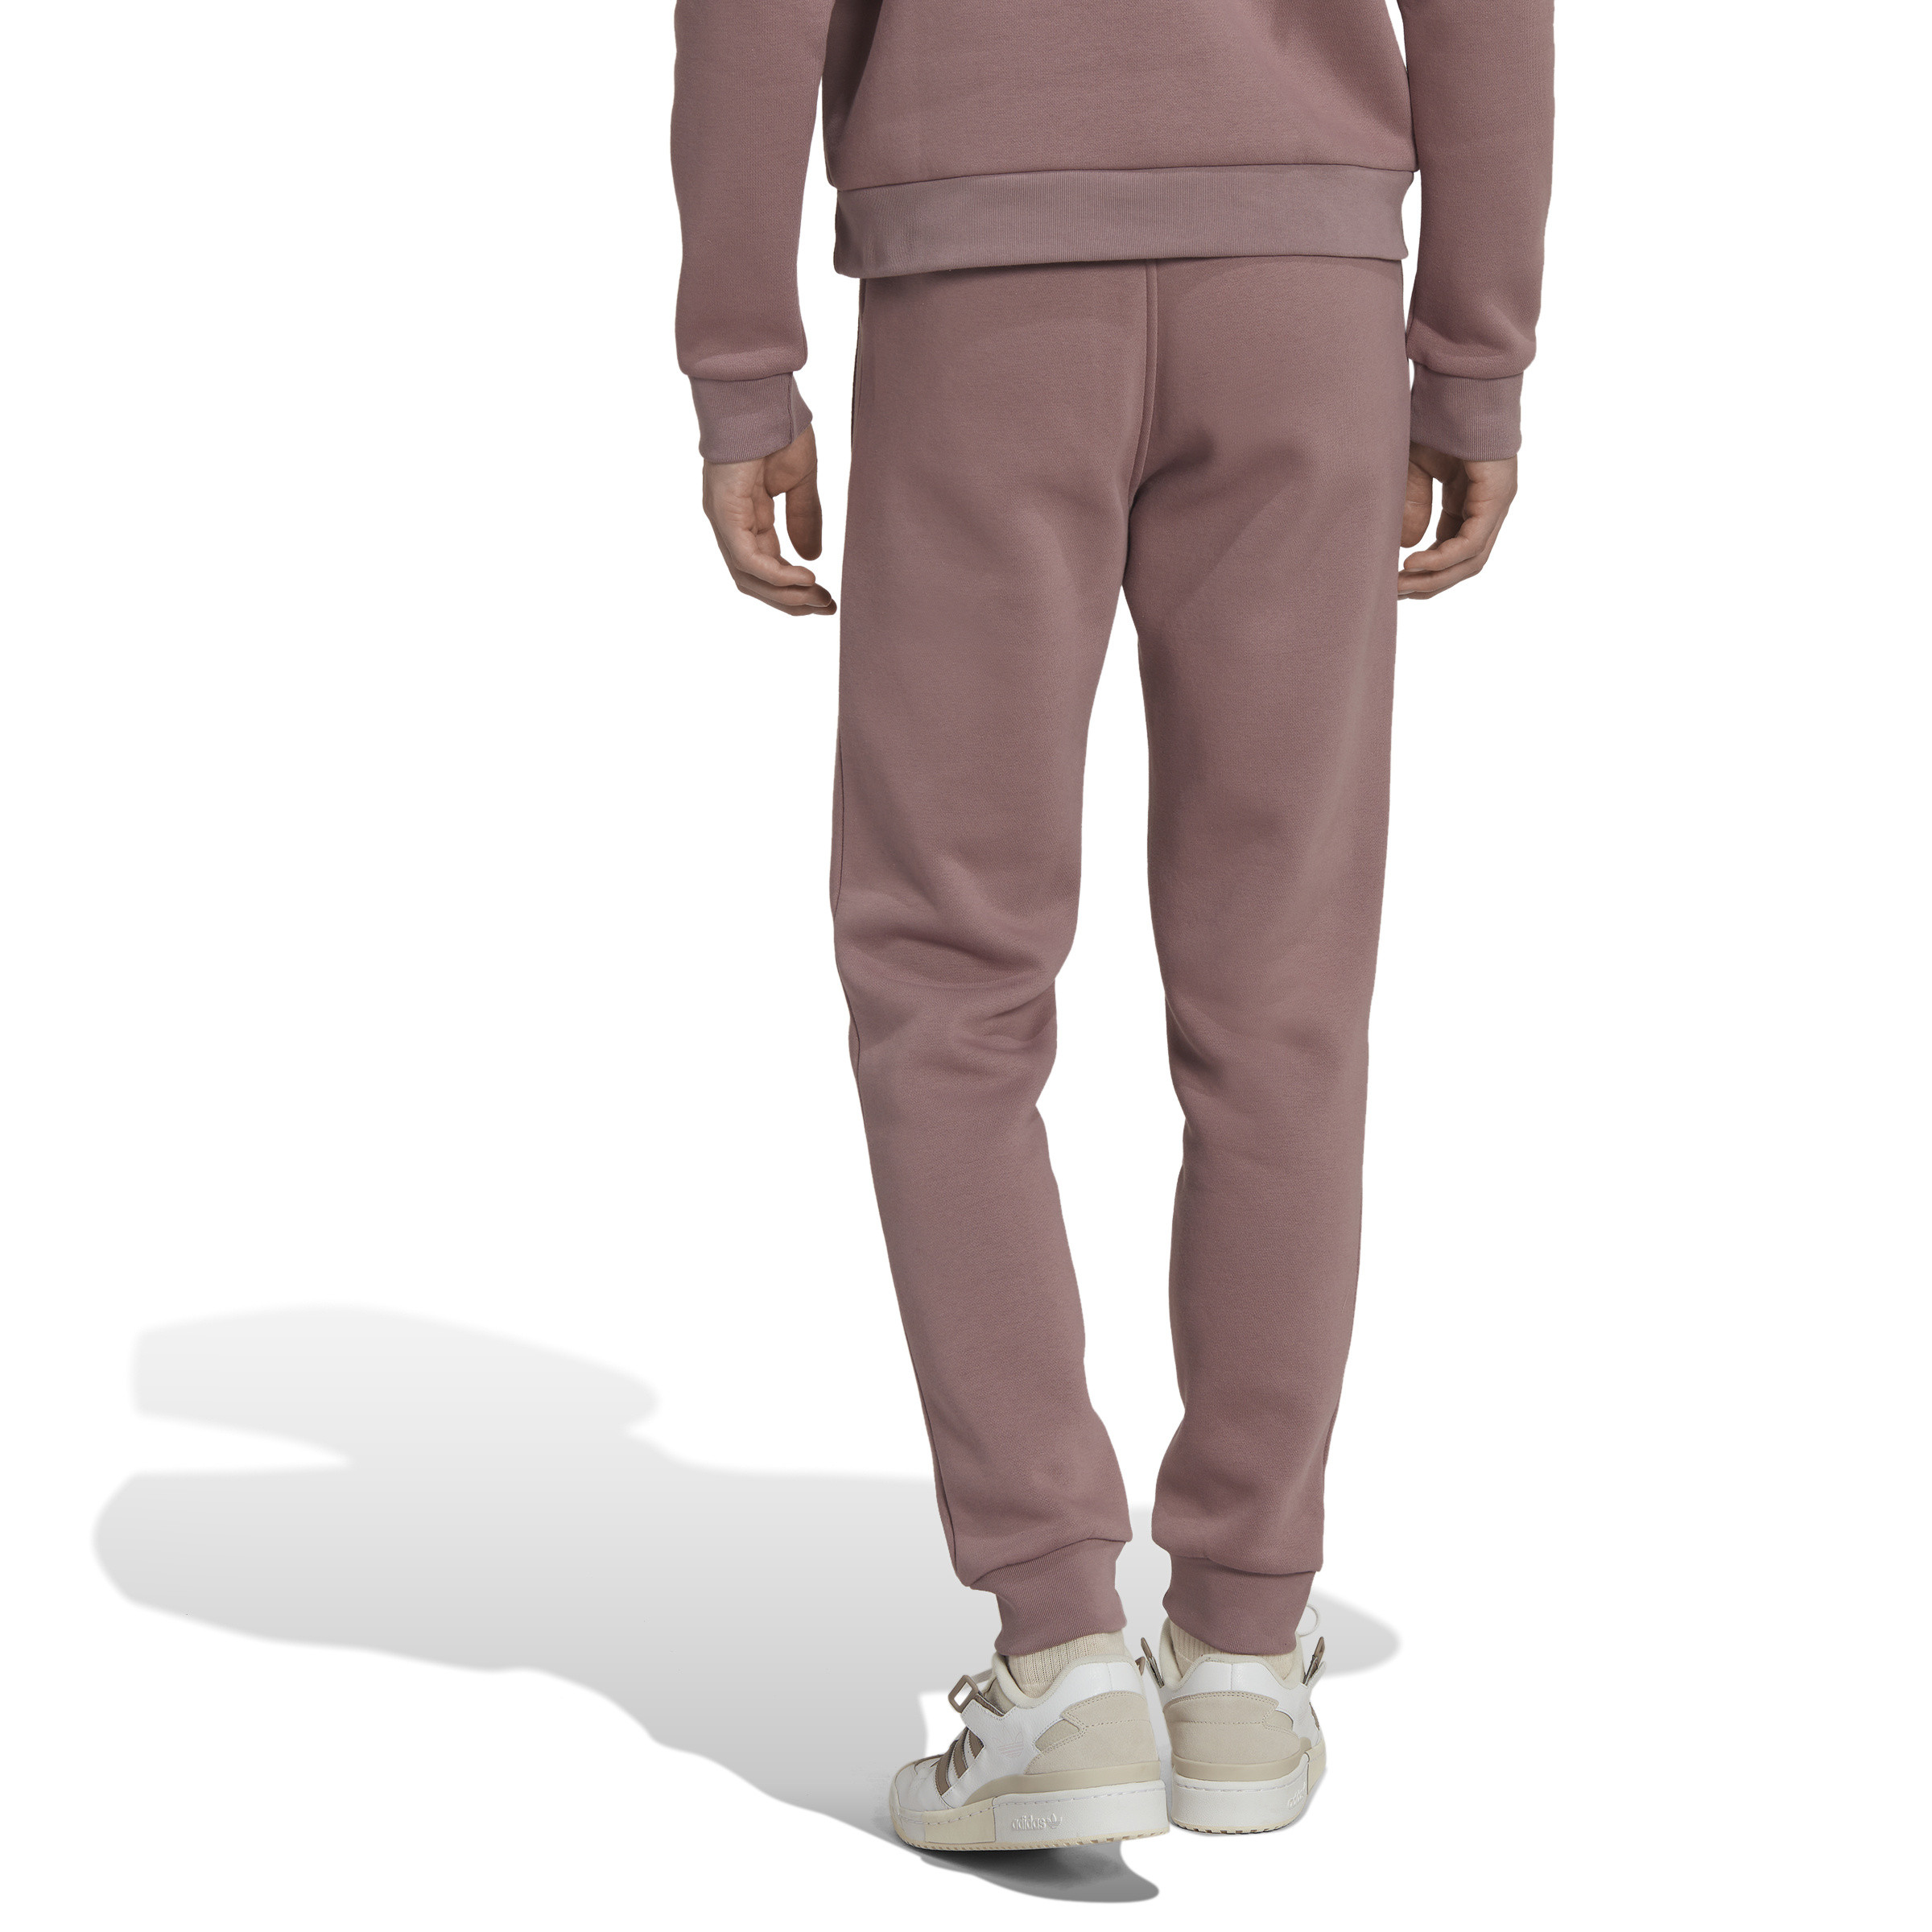 Adidas - Adicolor Essentials Trefoil Pants, Antique Pink, large image number 3